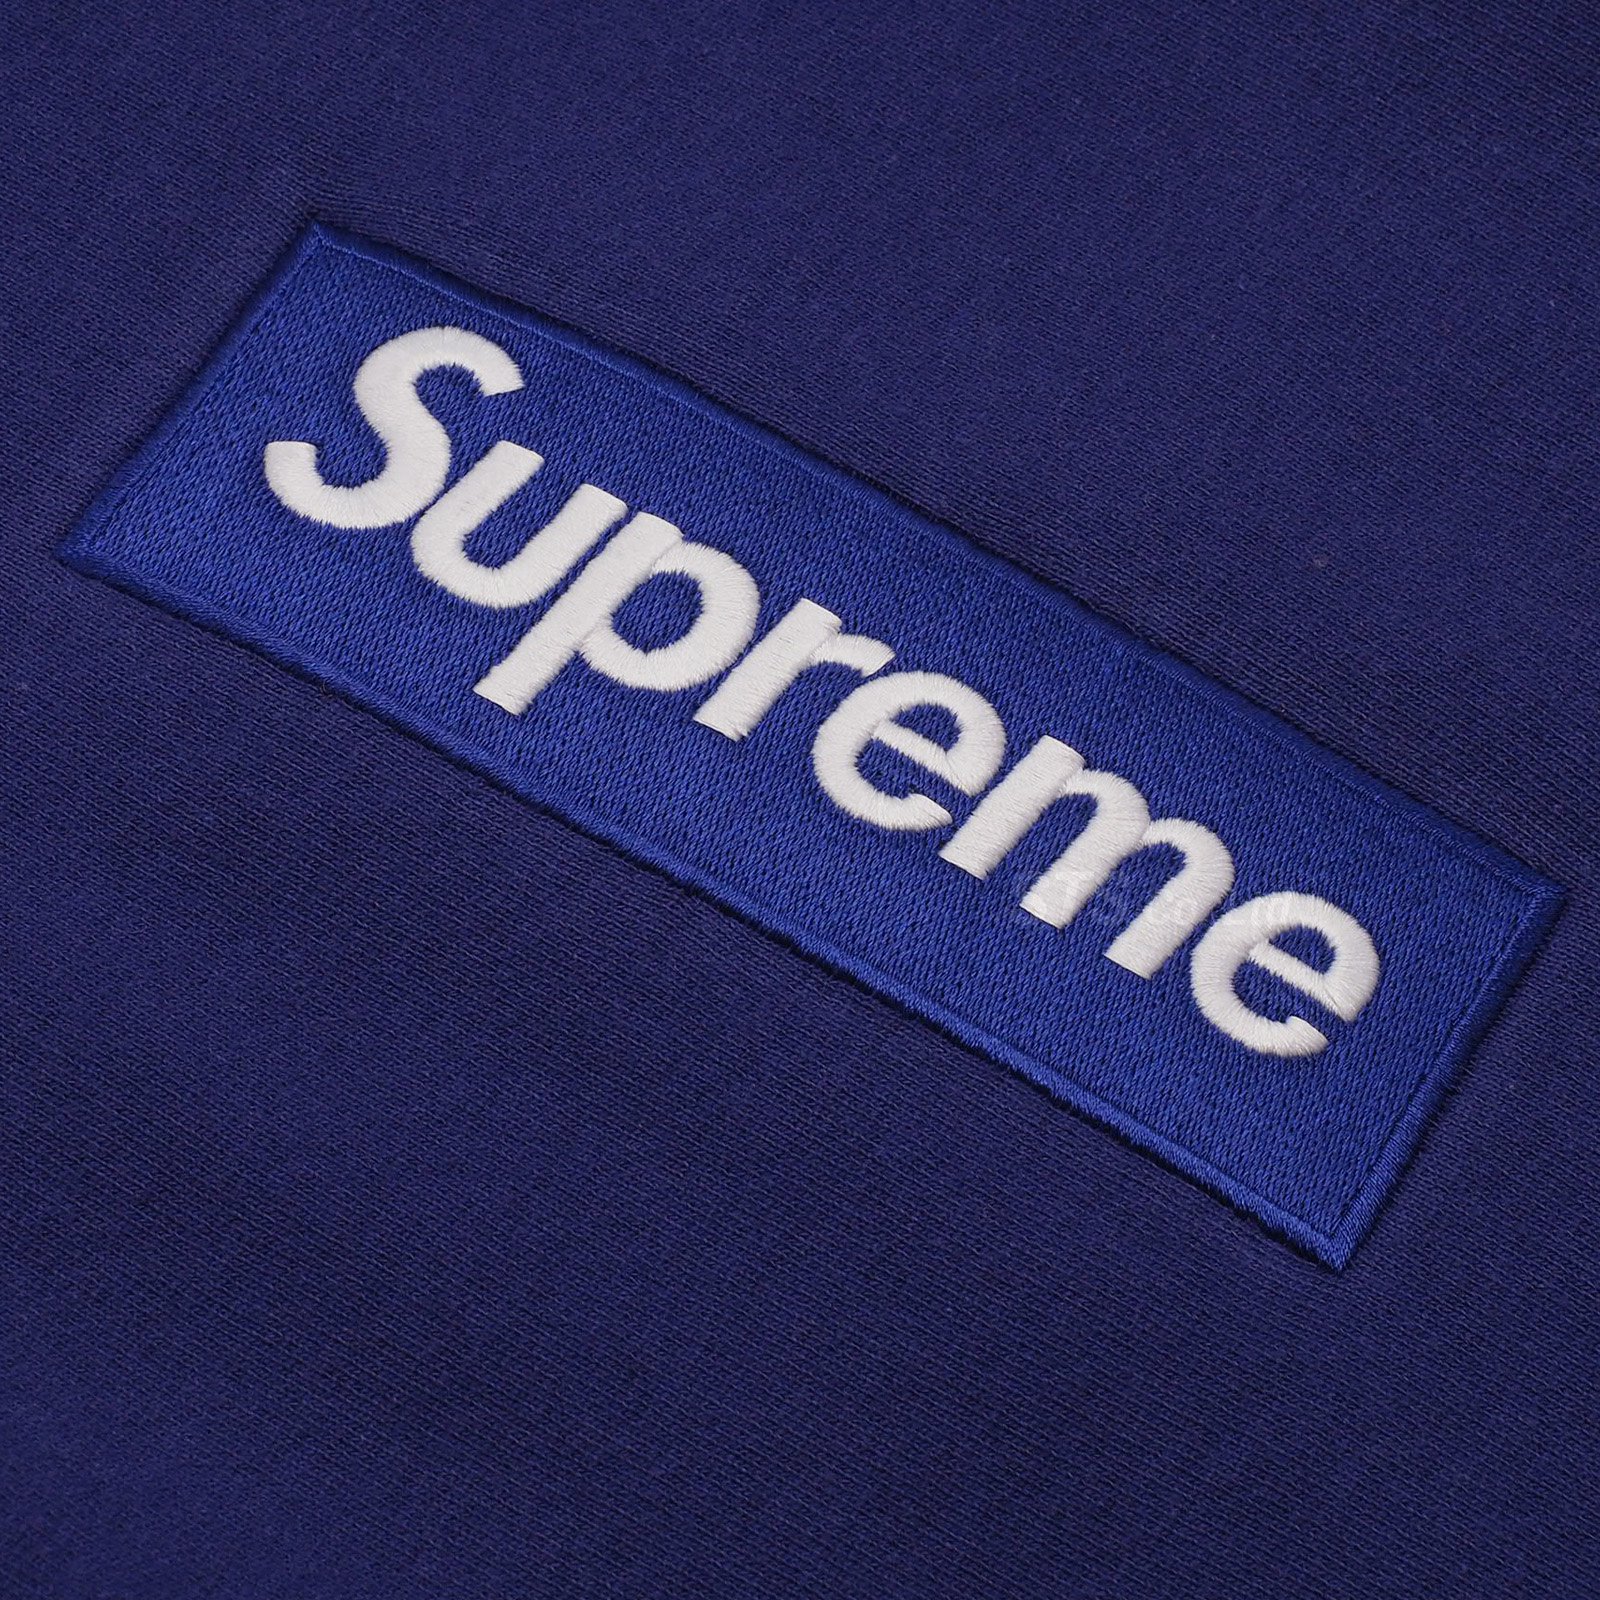 Supreme - Box Logo Hooded Sweatshirt - ParkSIDER